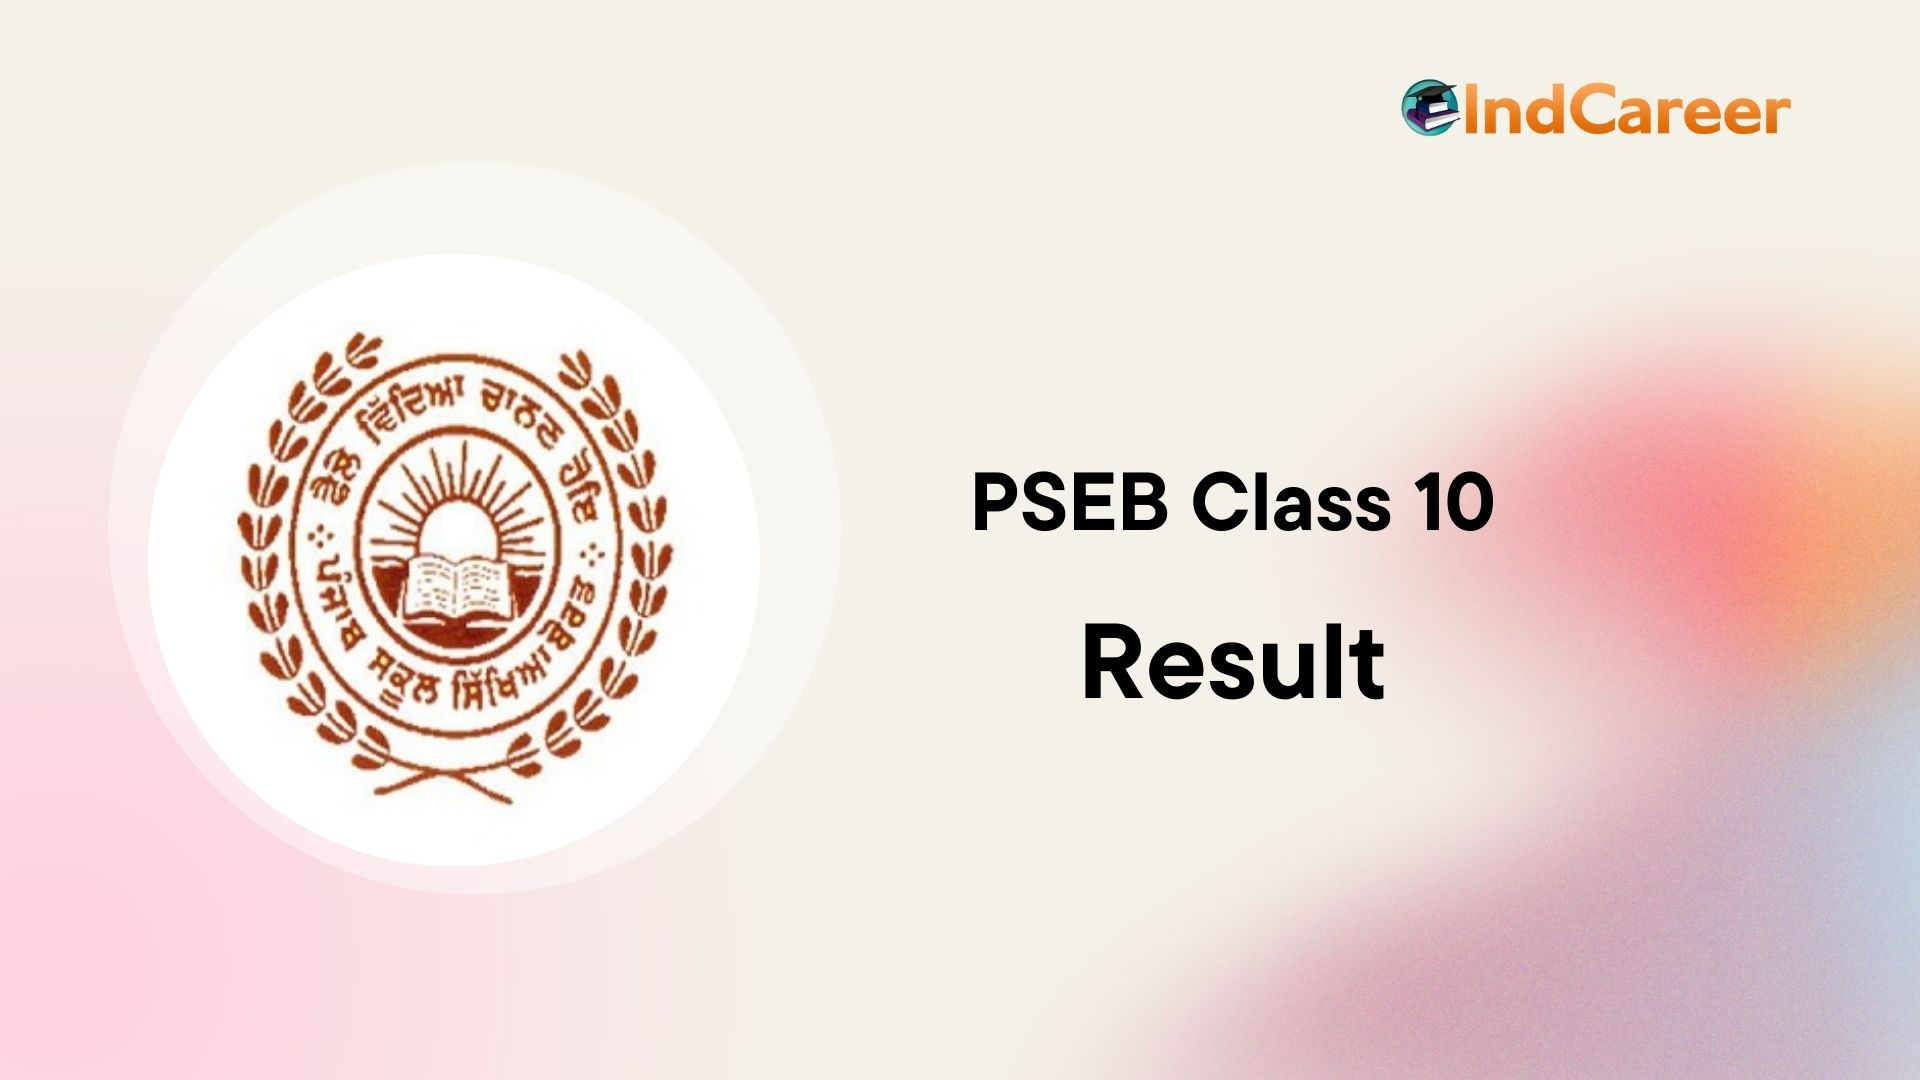 PSEB 12th Result 2022